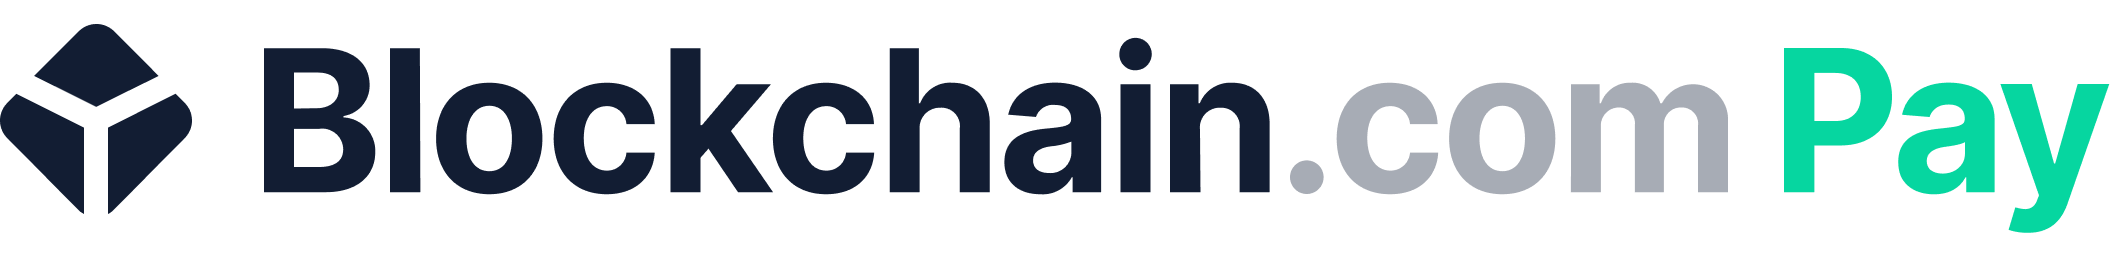 Blockchain.com Pay logo